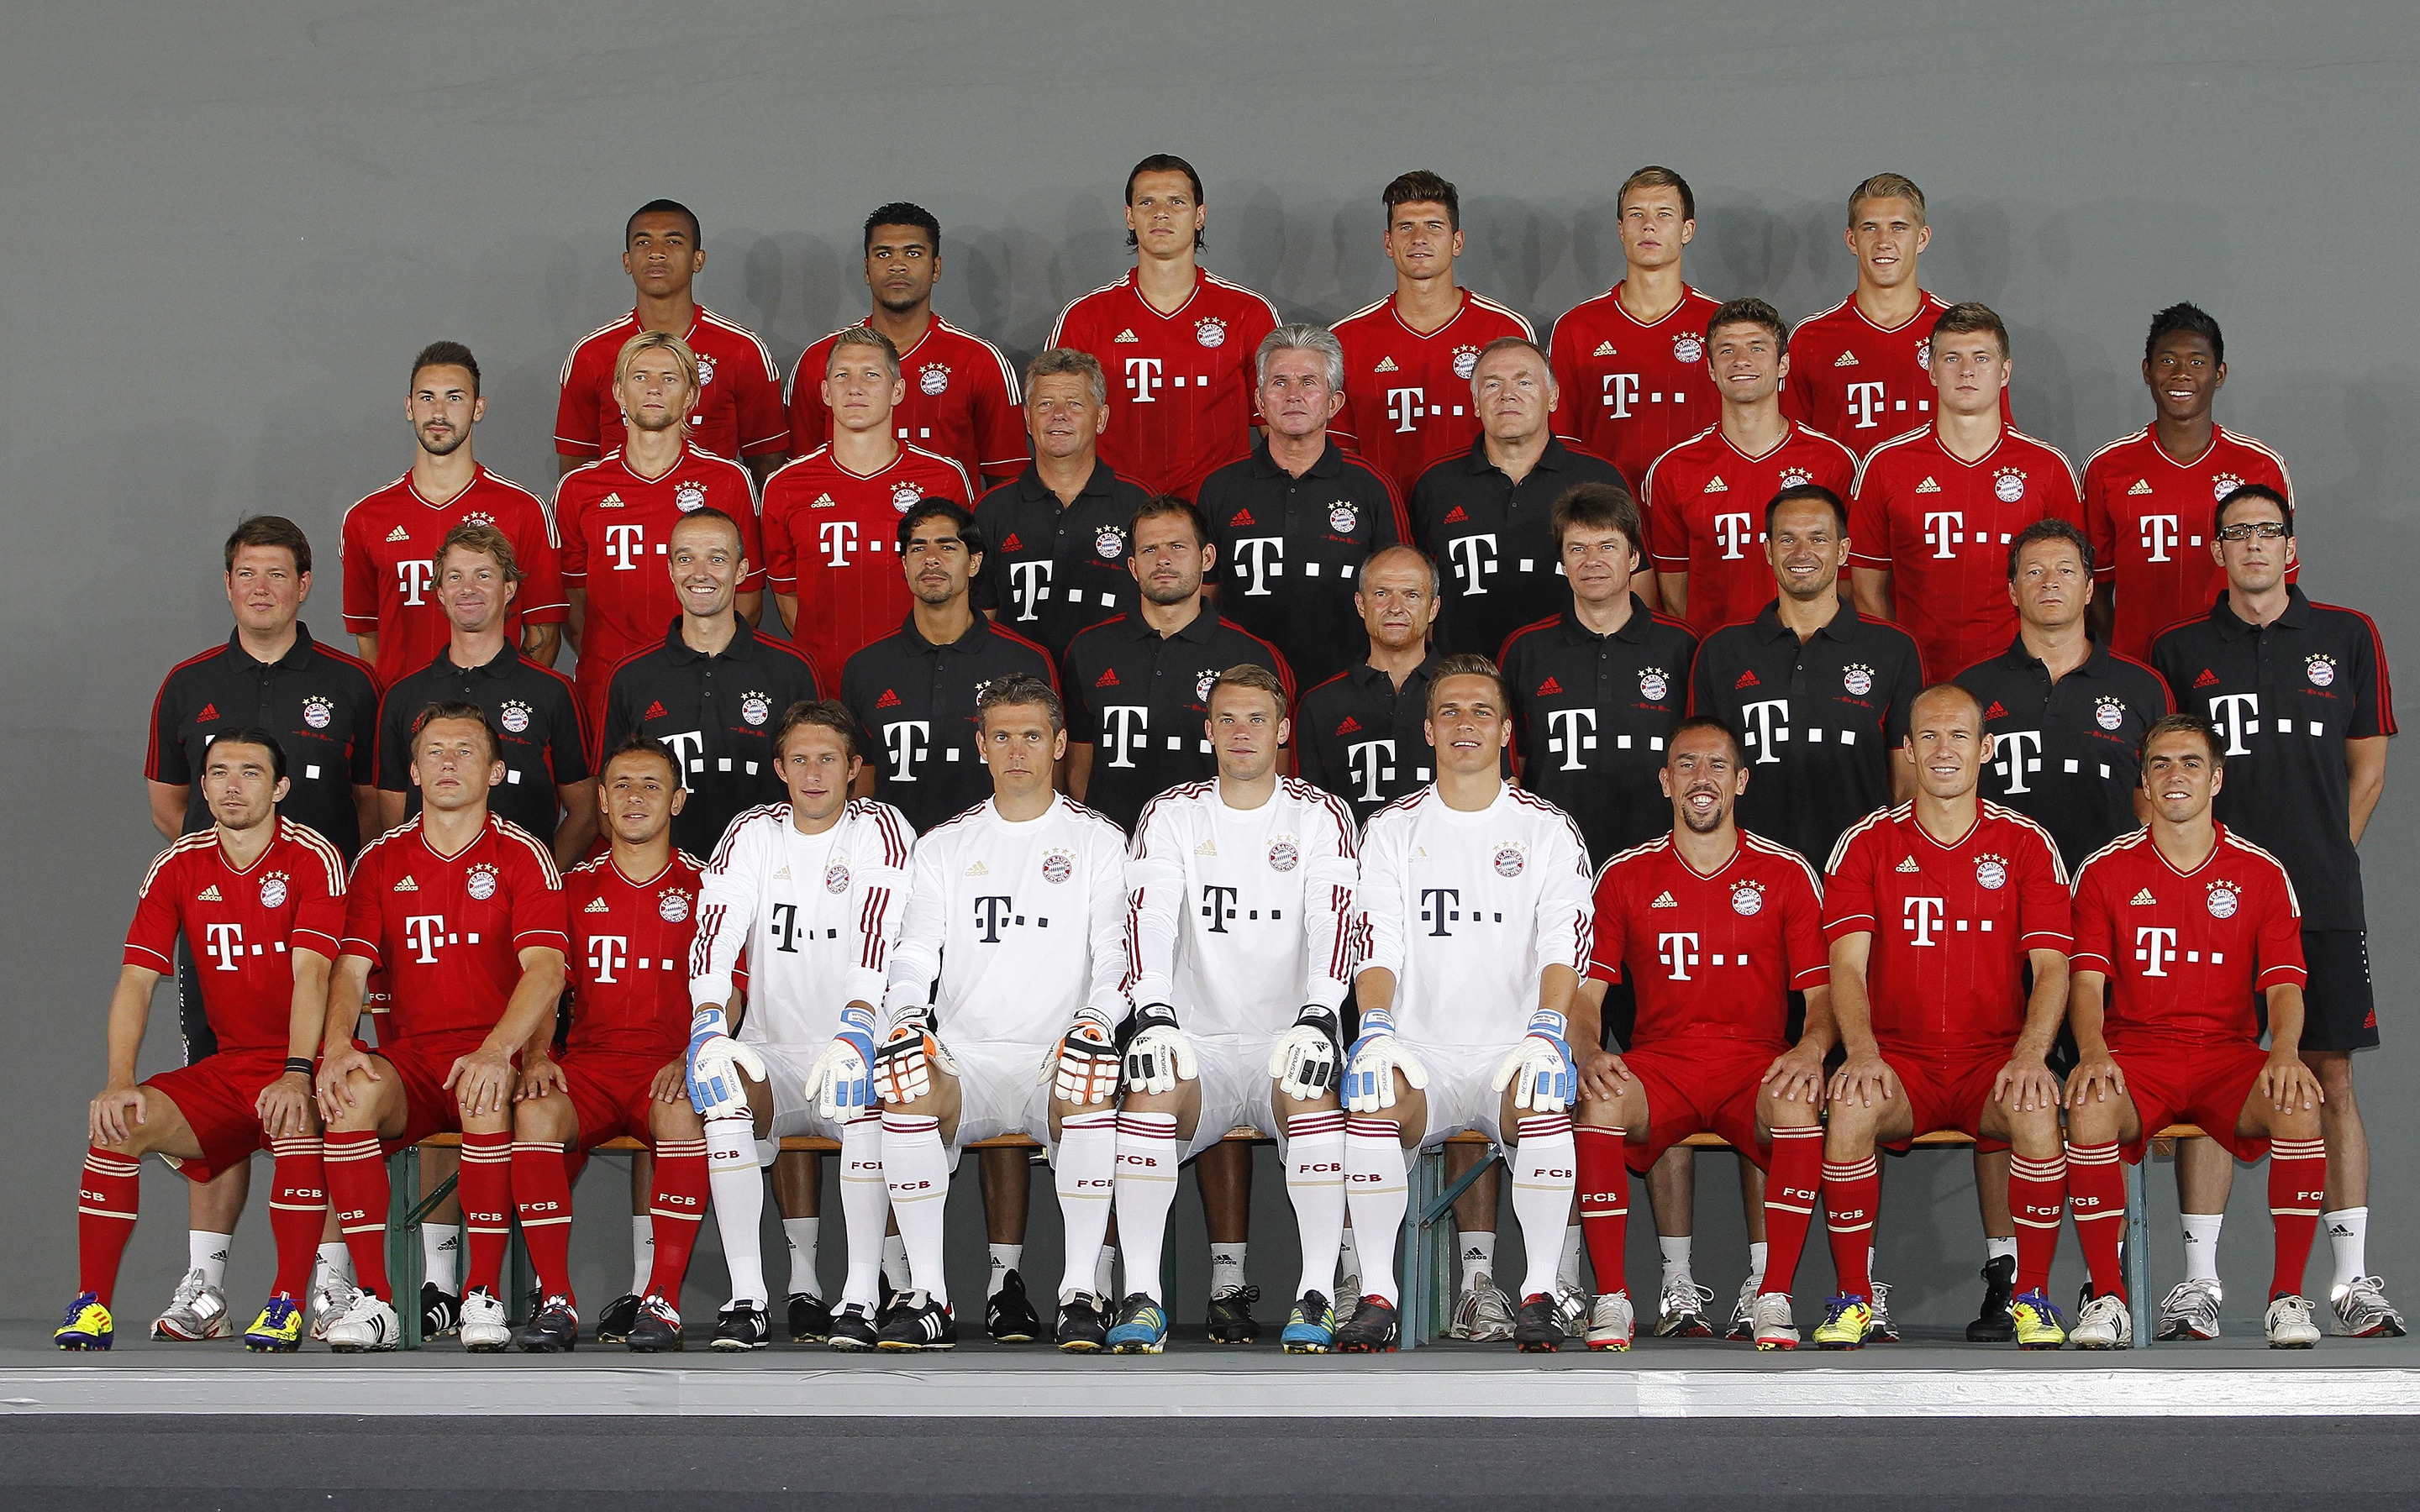 FC Bayern Munchen 2012 2013 for 2880 x 1800 Retina Display resolution